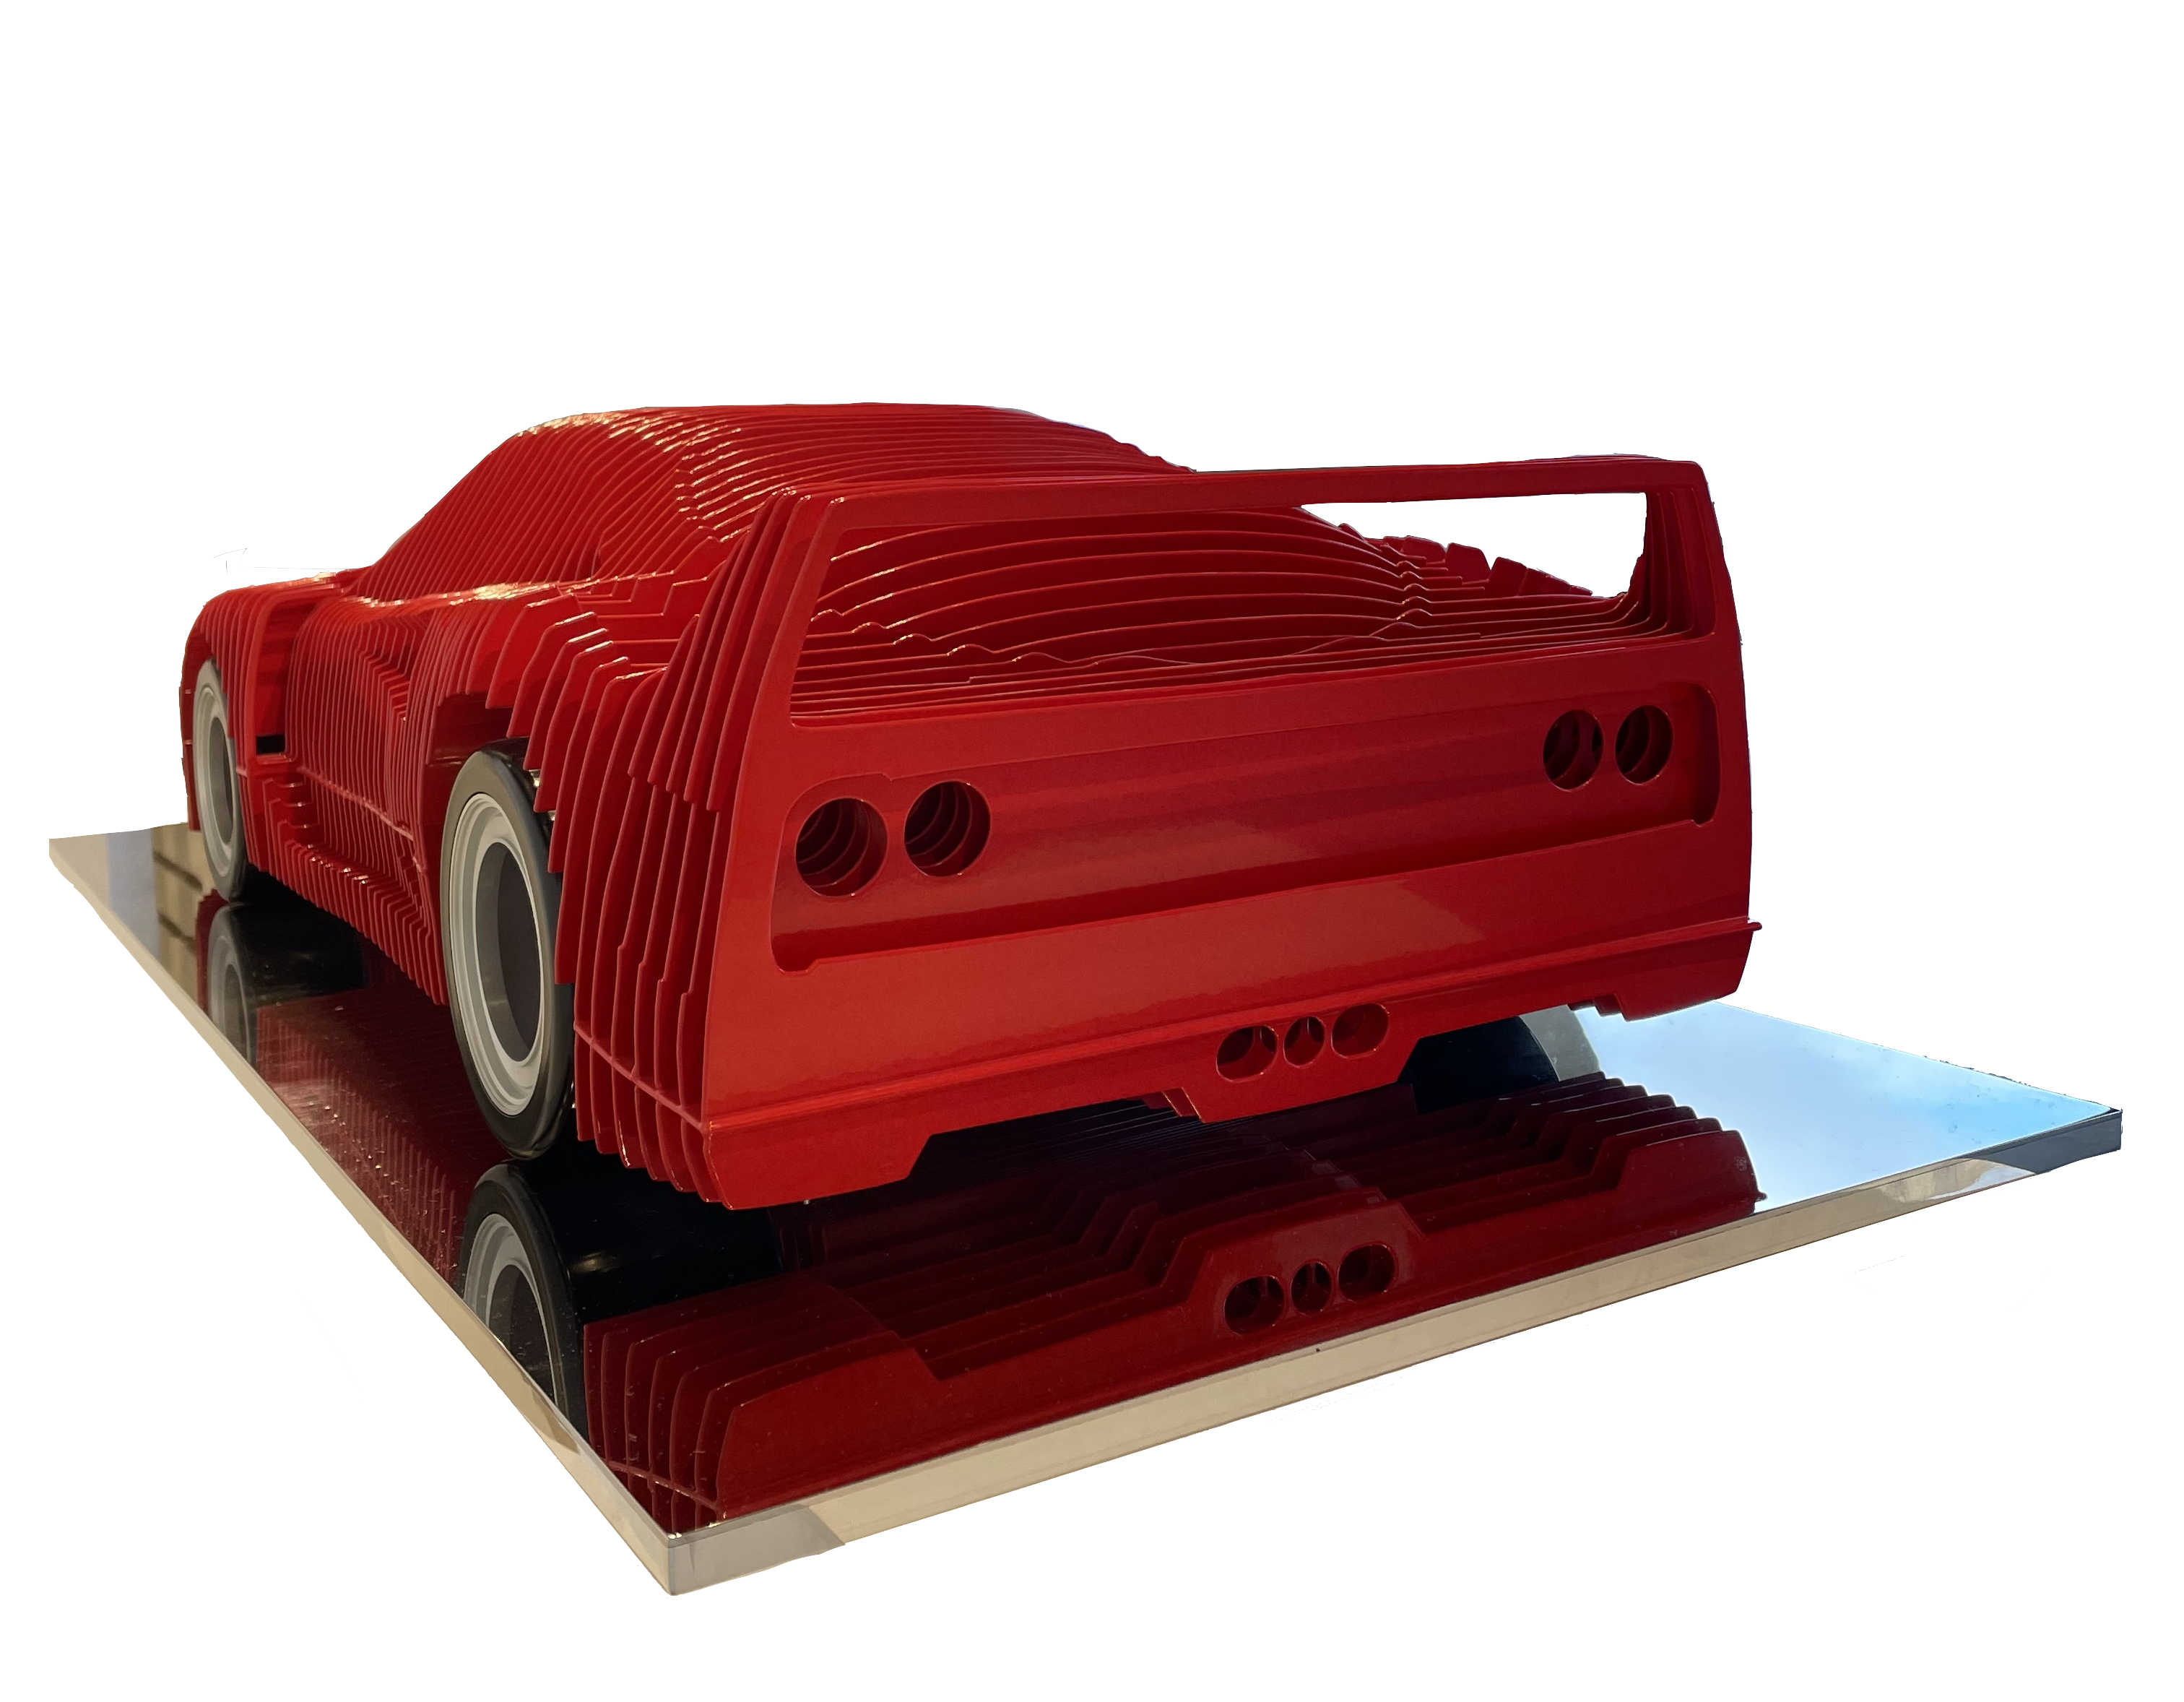 Antoine Dufilho - Ferrari F40 2020, Socle en inox poli – roues en aluminium massif poli et fuselage en acier anodisé noir 19 × 80 × 36 cm |7 1/2 × 31 1/2 × 14 1/5 in Edition de 8 © Marciano